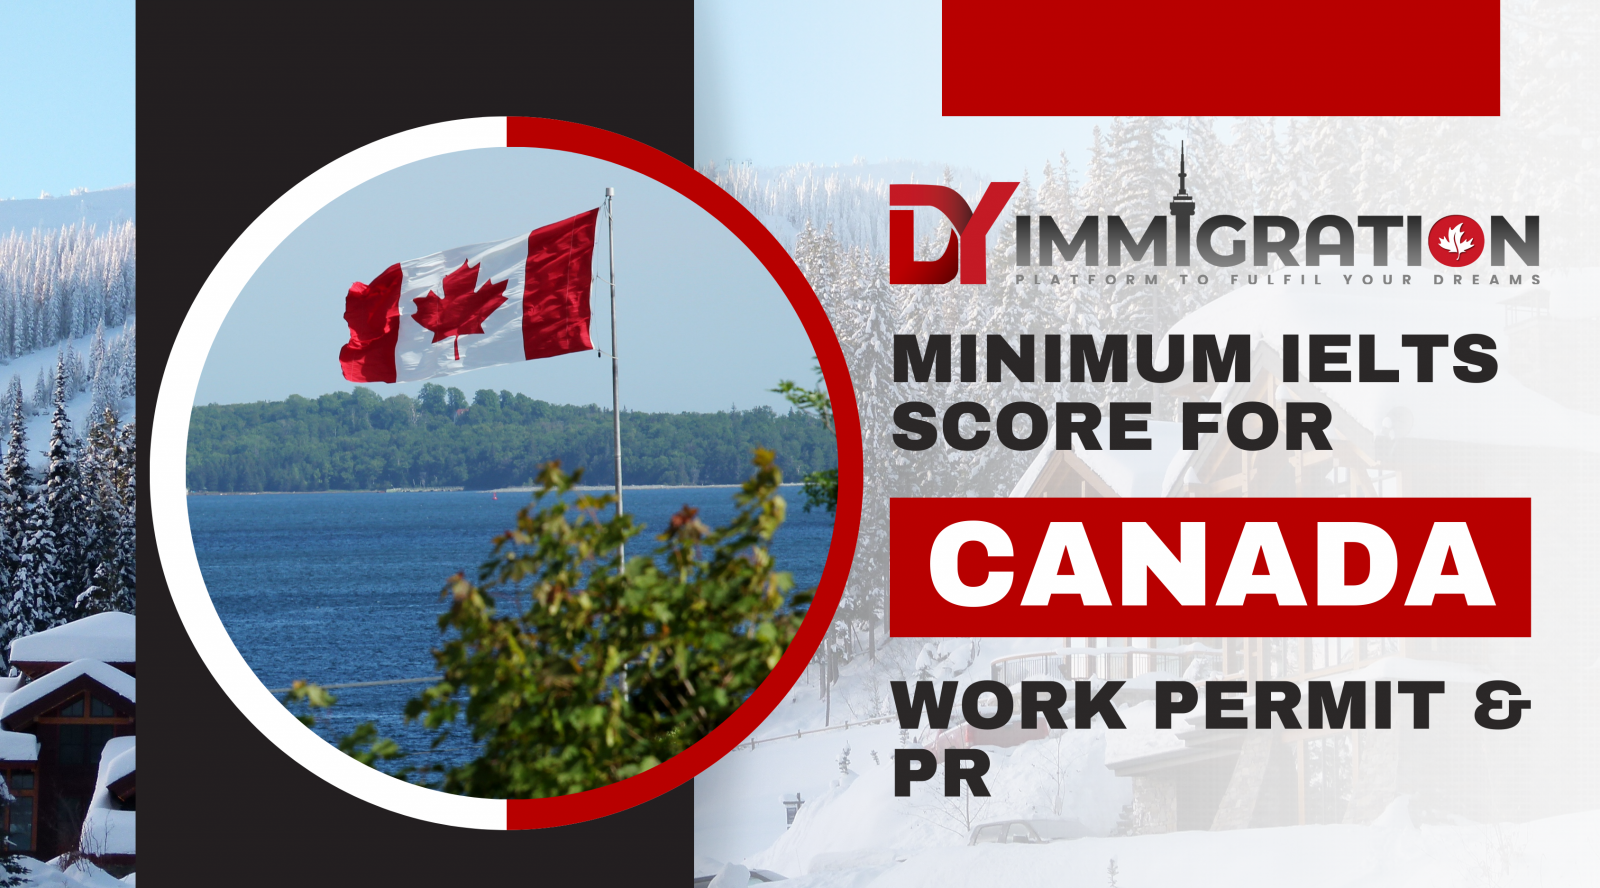 Minimum IELTS score for Canada Workpermit and PR